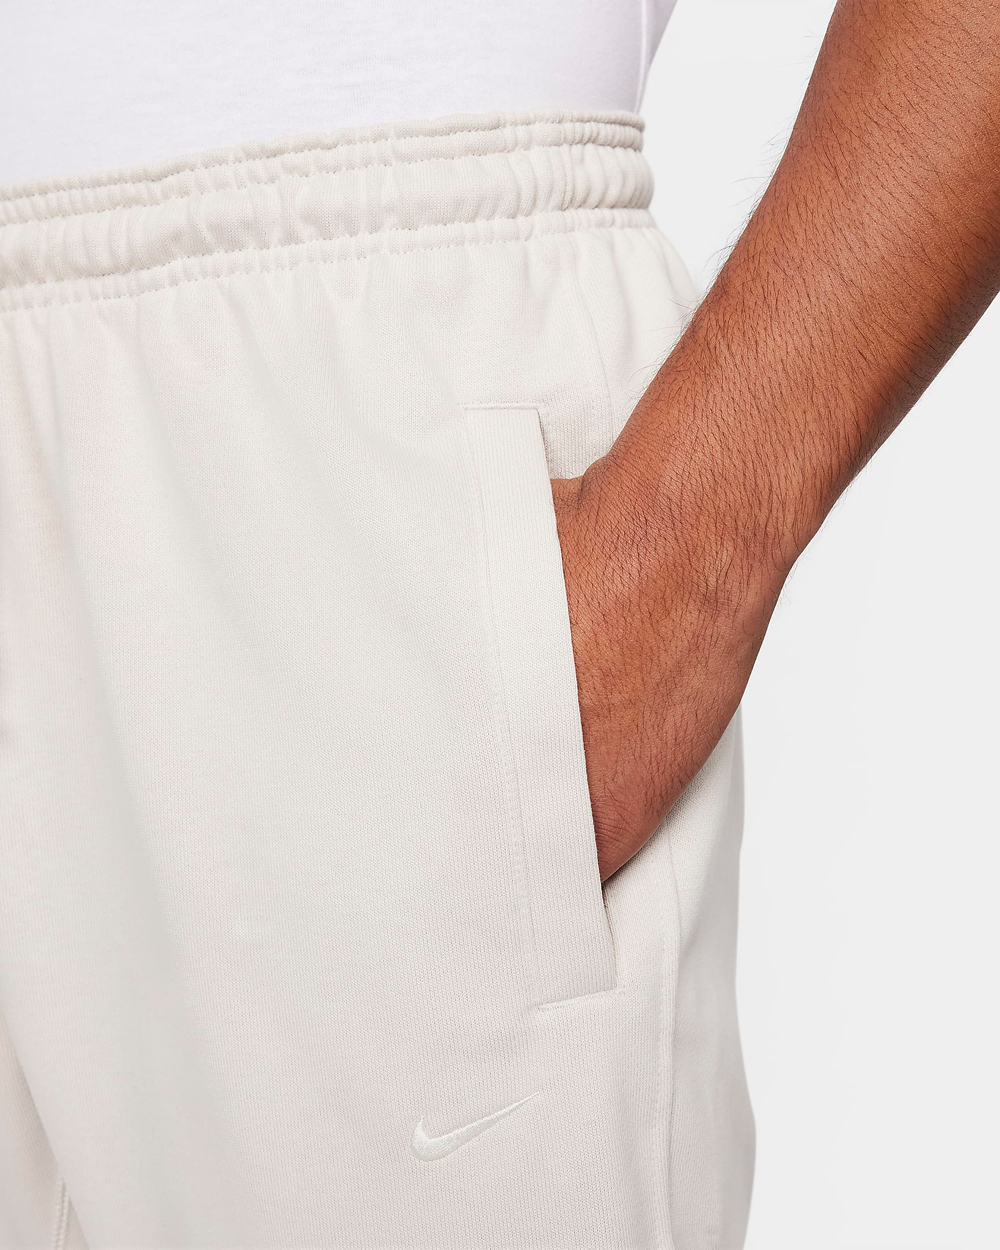 Nike Standard Issue Pants Light Orewood Brown 1